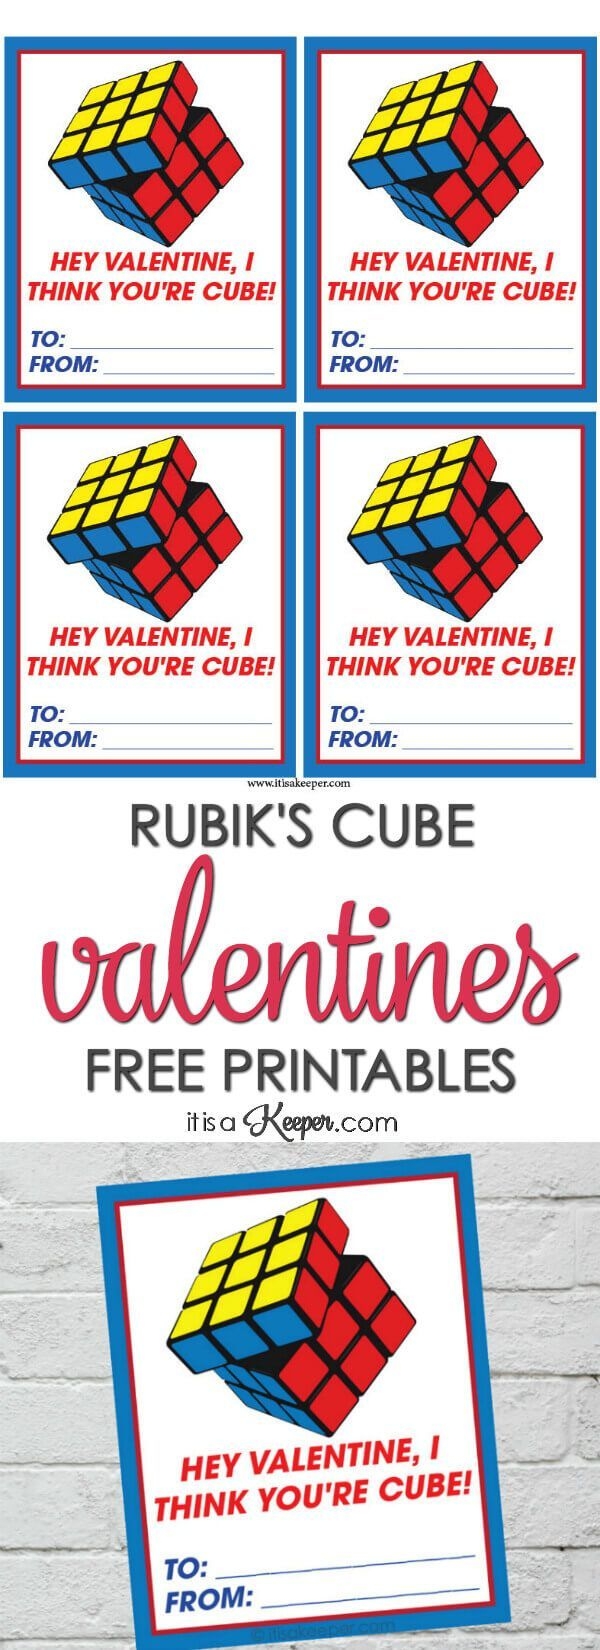 Rubiks Cube Valentine Printables Free Printable Rubiks Cube Themed Valentines For You Valentines Printables Free Printable Valentines Cards Valentines Cards